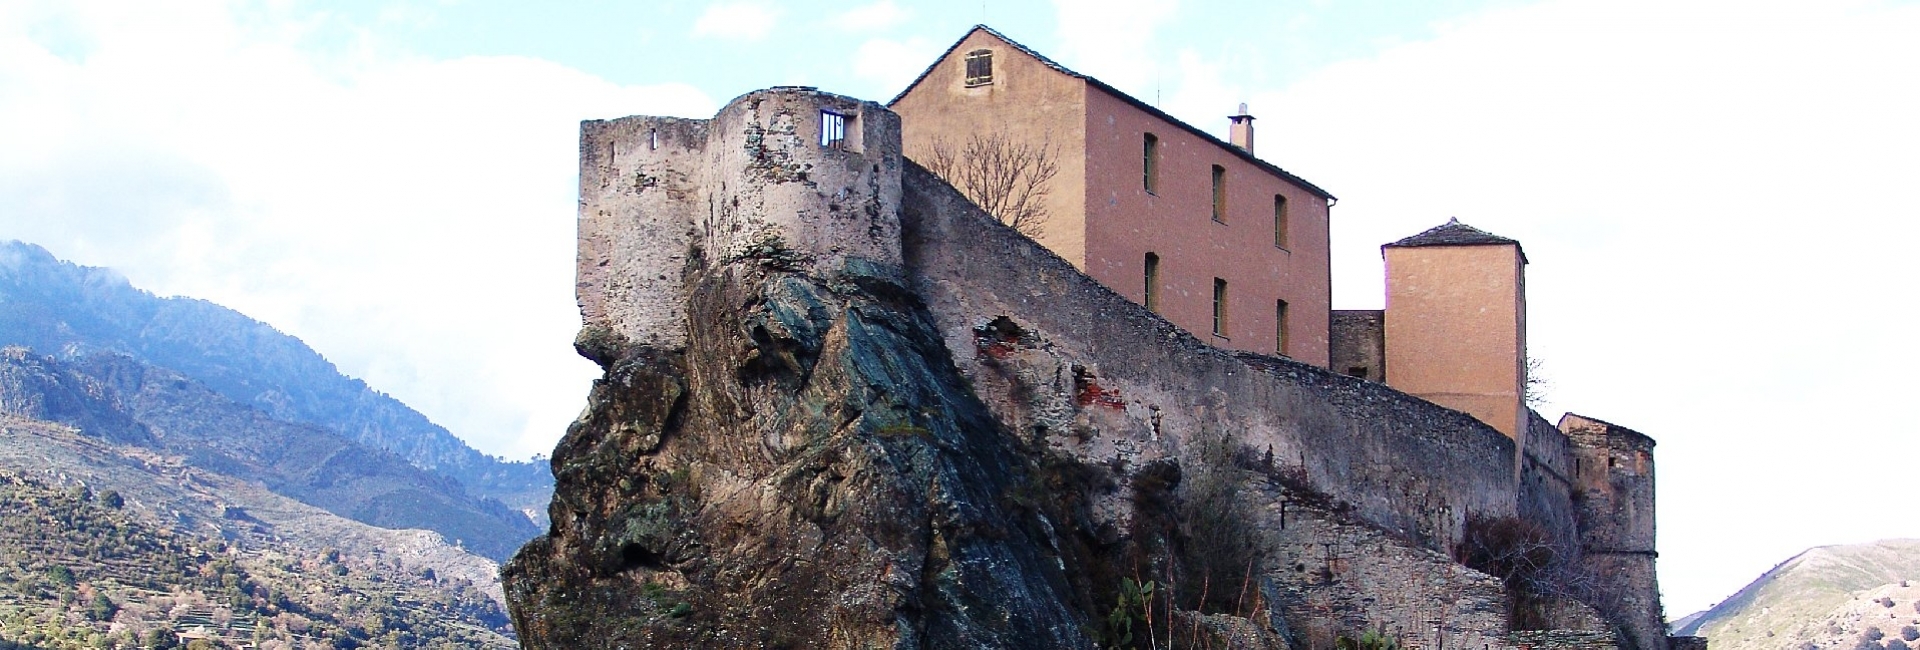 The citadel of Corte